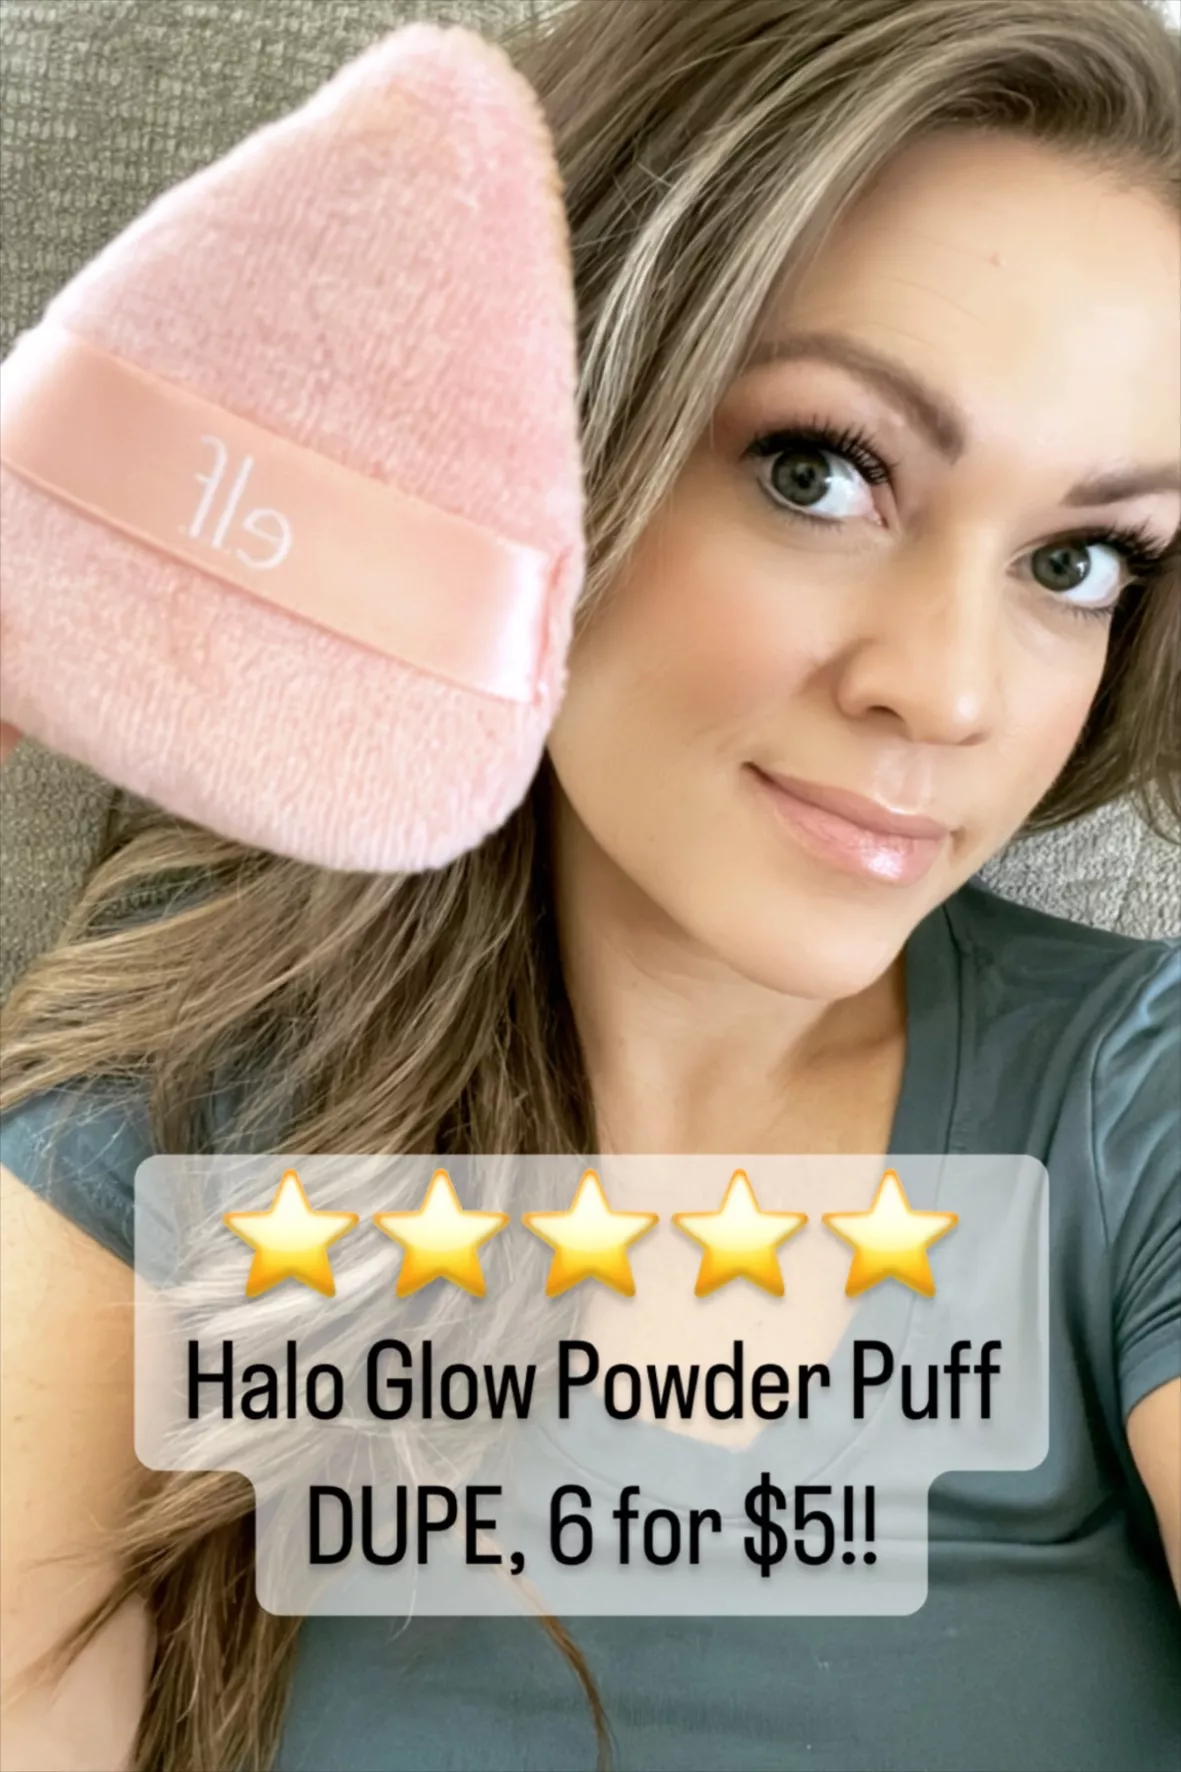 e.l.f. Halo Glow Powder Puff